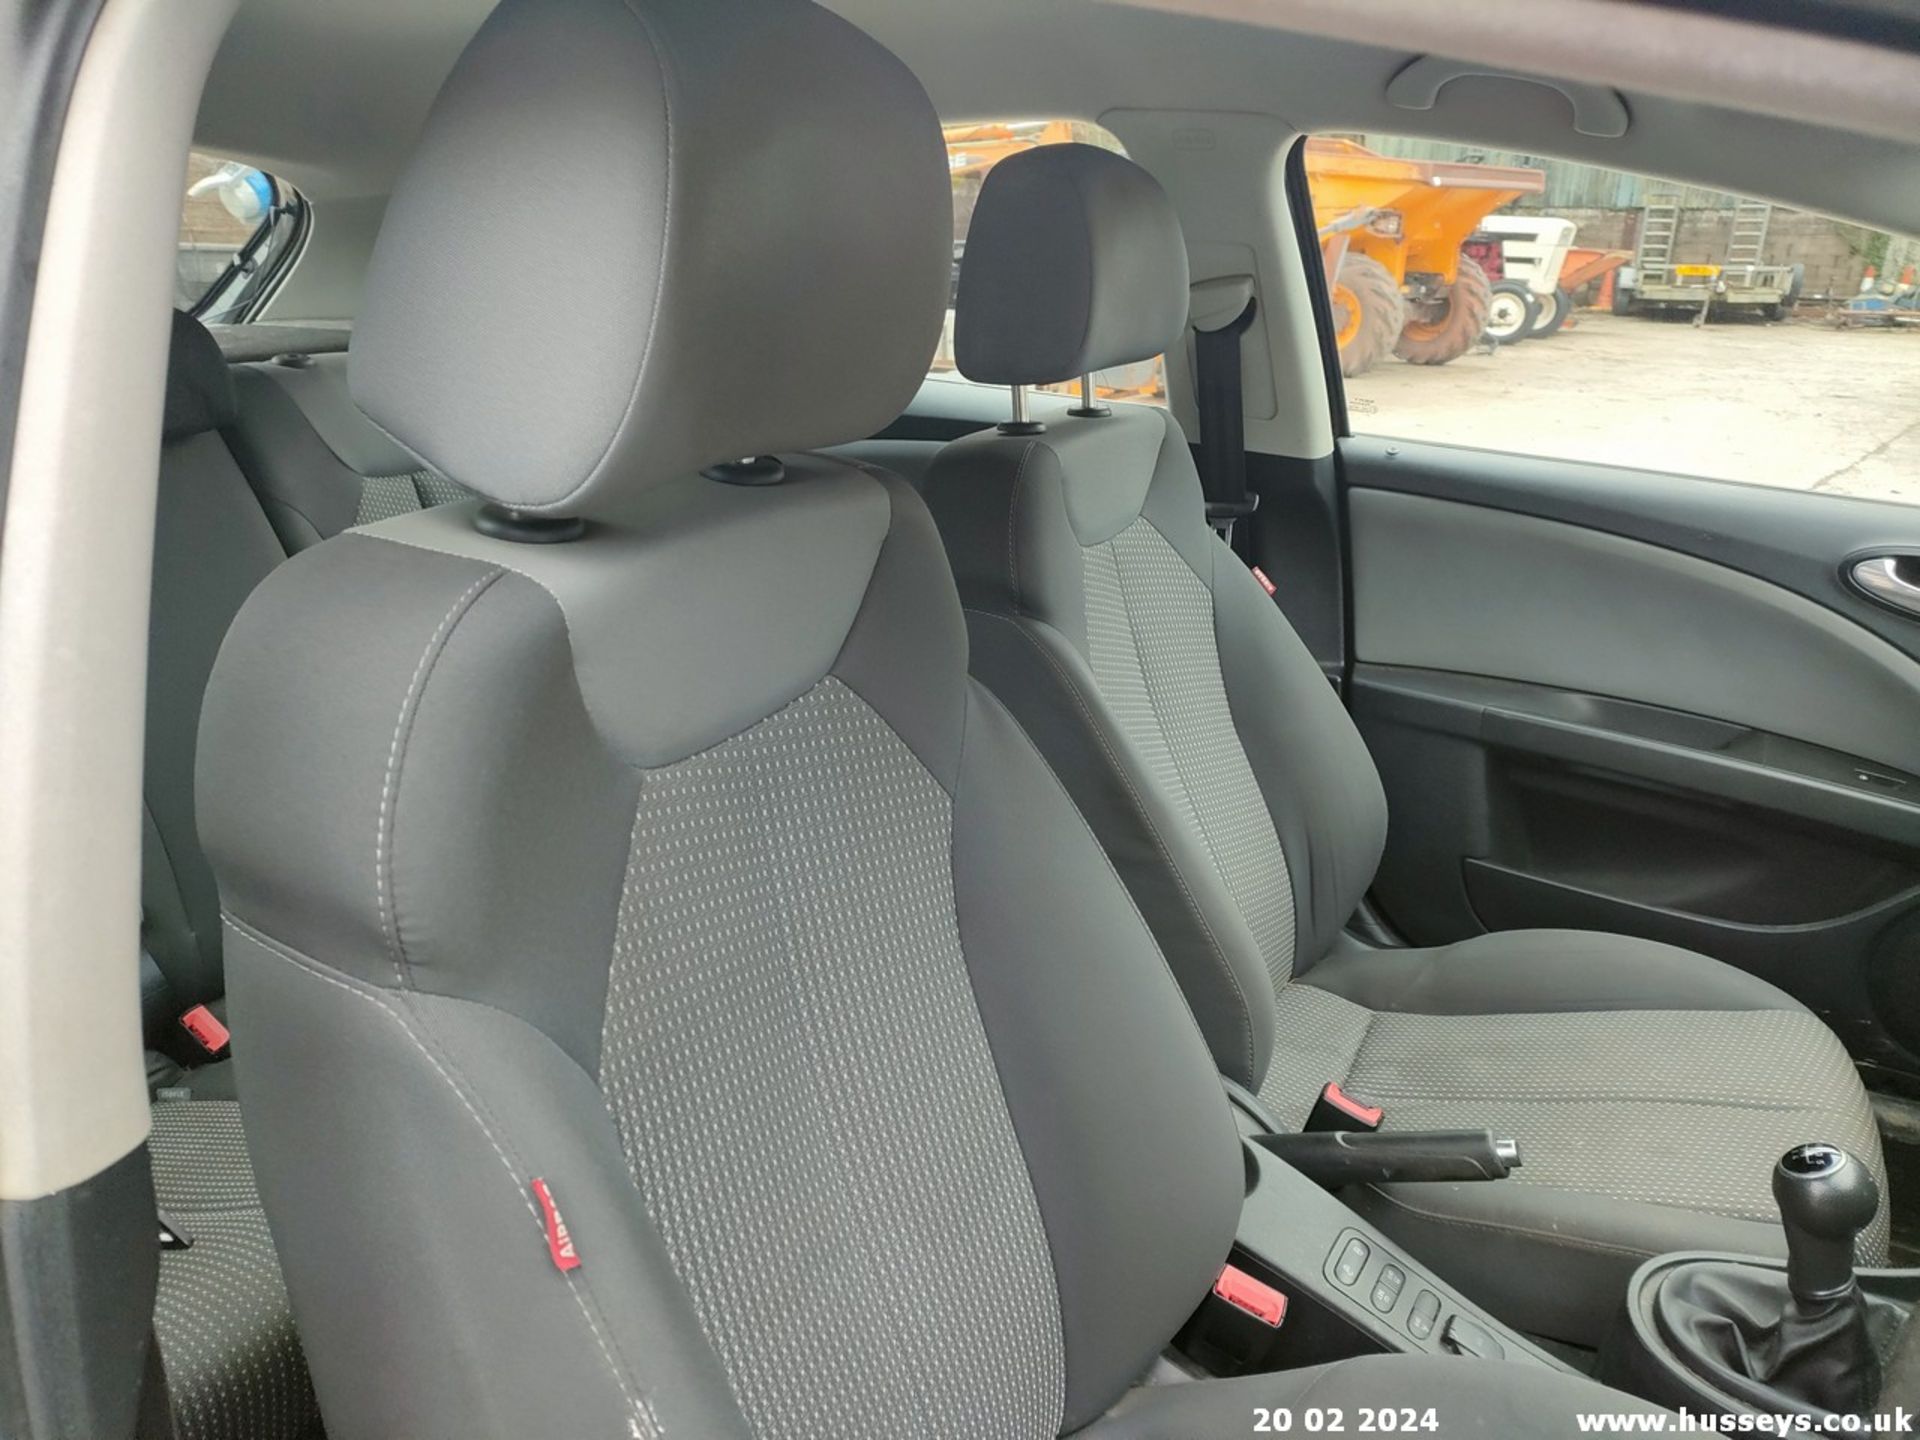 11/11 SEAT LEON S CR TDI - 1598cc 5dr Hatchback (Grey, 160k) - Image 39 of 48